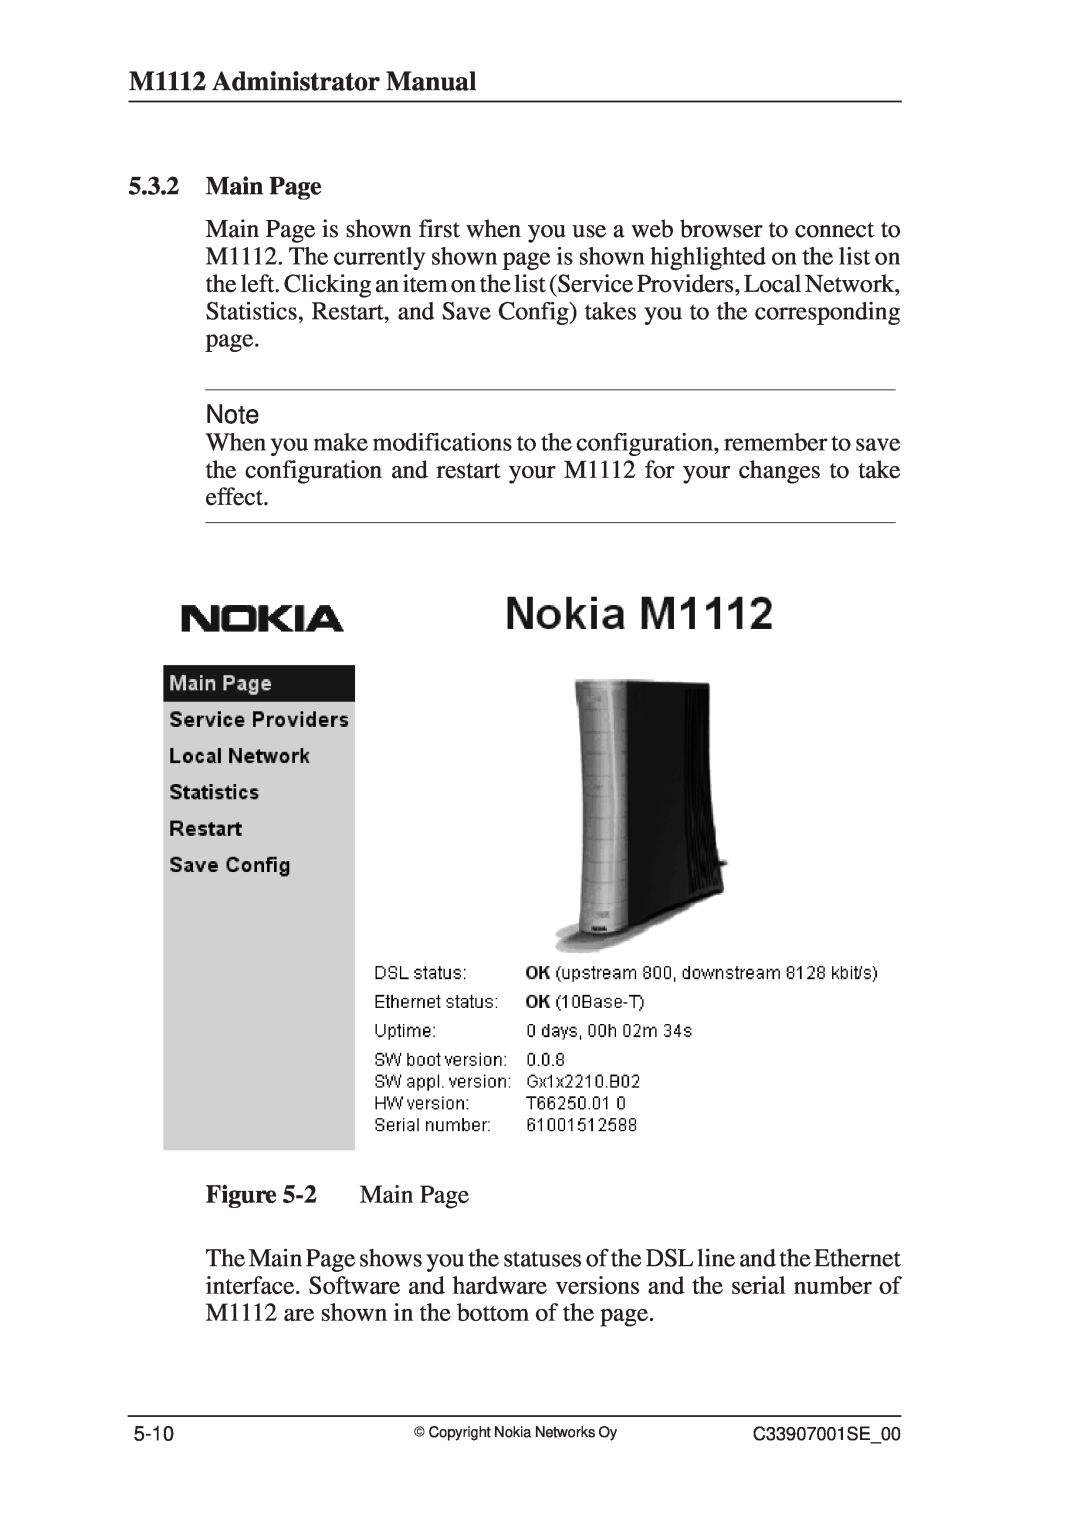 Nokia manual M1112 Administrator Manual, Main Page 